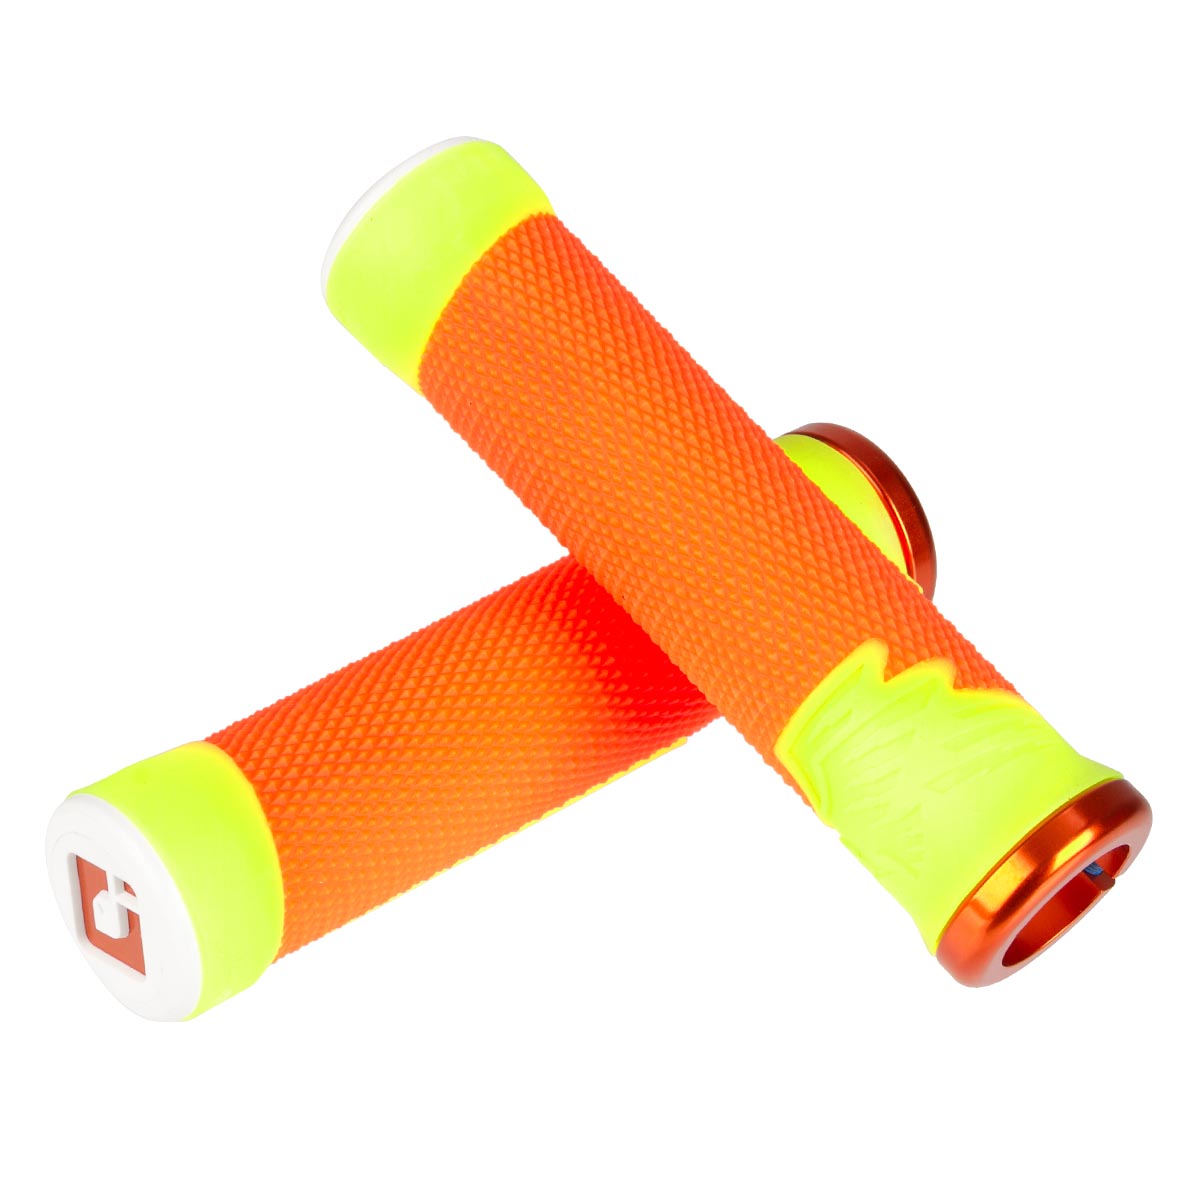 ODI Manopole MTB AG-2 Lock-On Neon Orange/Neon Yellow - 135 mm